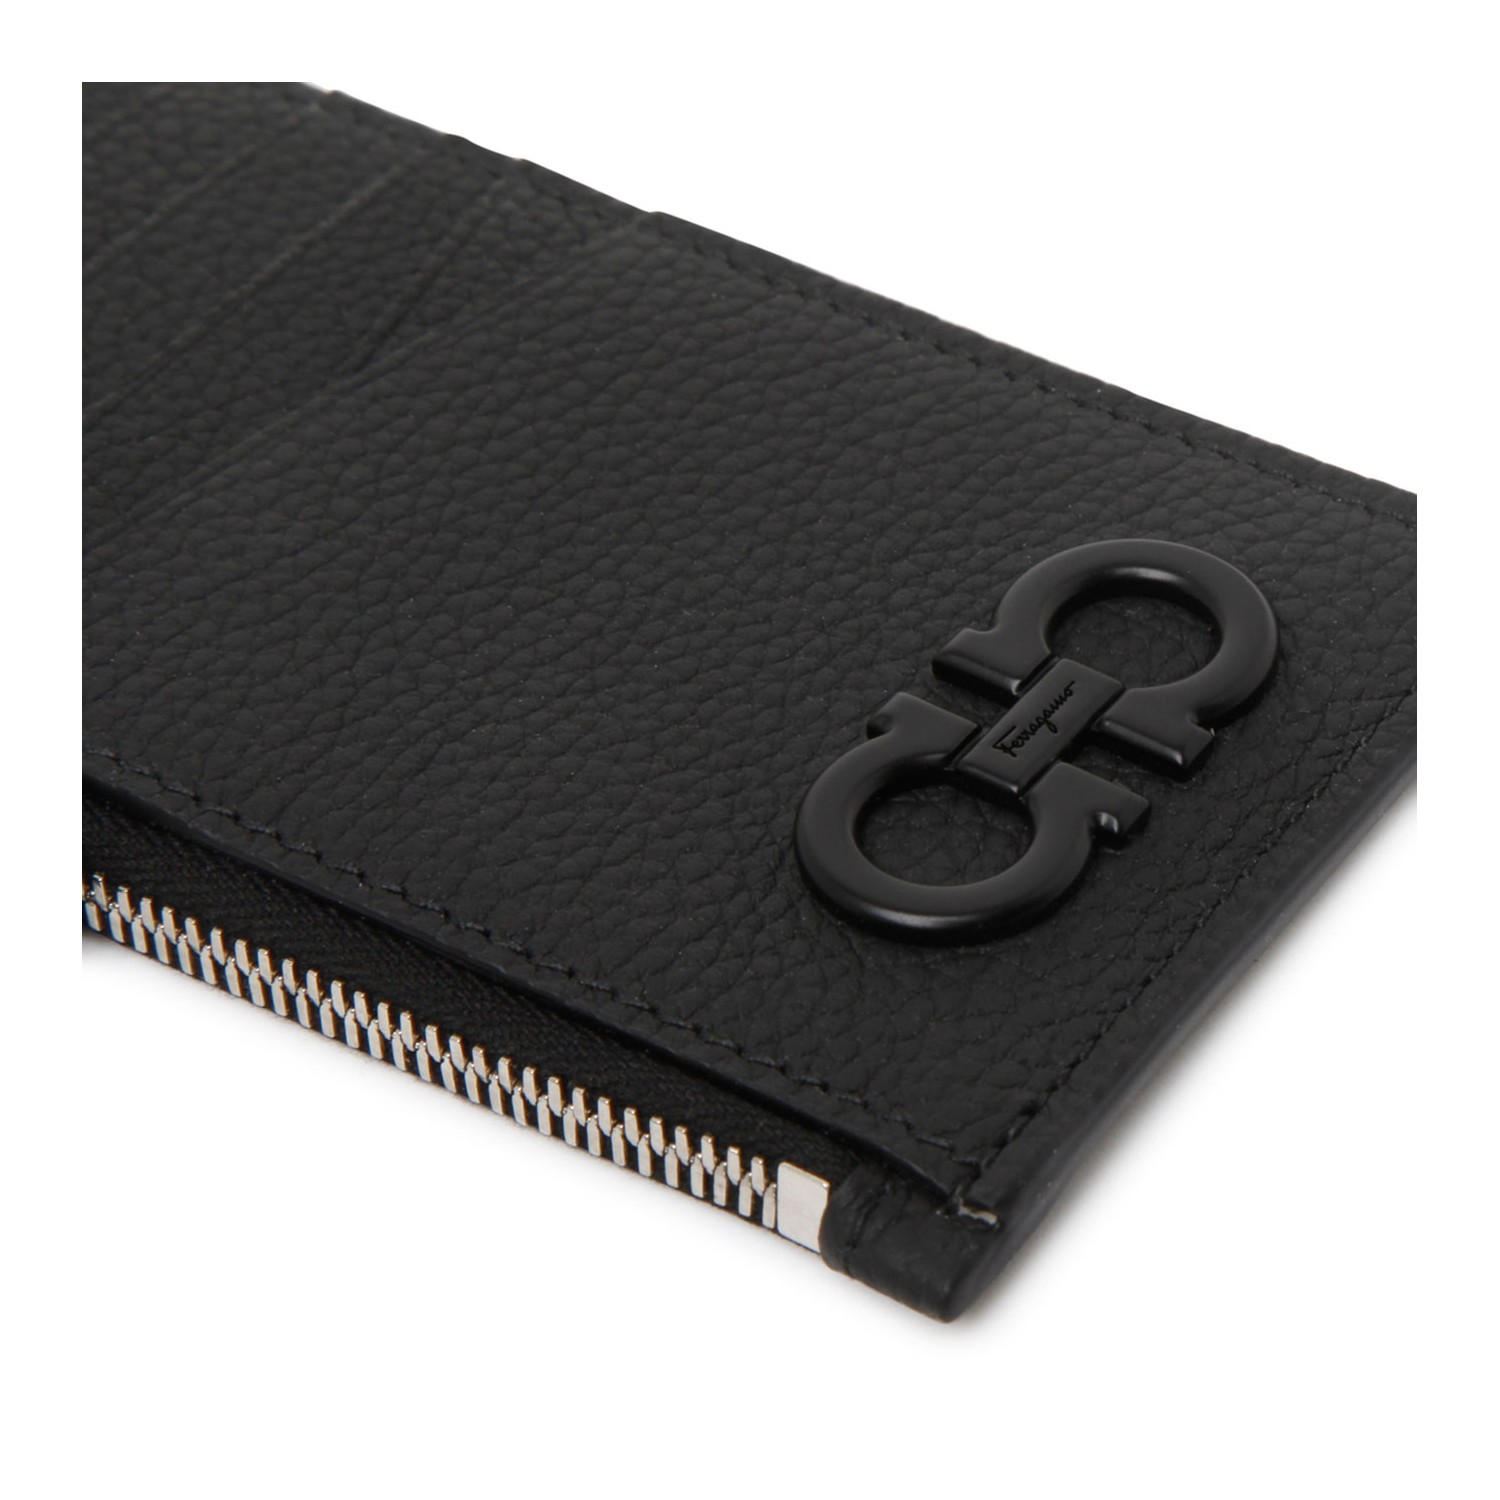 Ferragamo Black Calf Leather Card Holder With Strap.